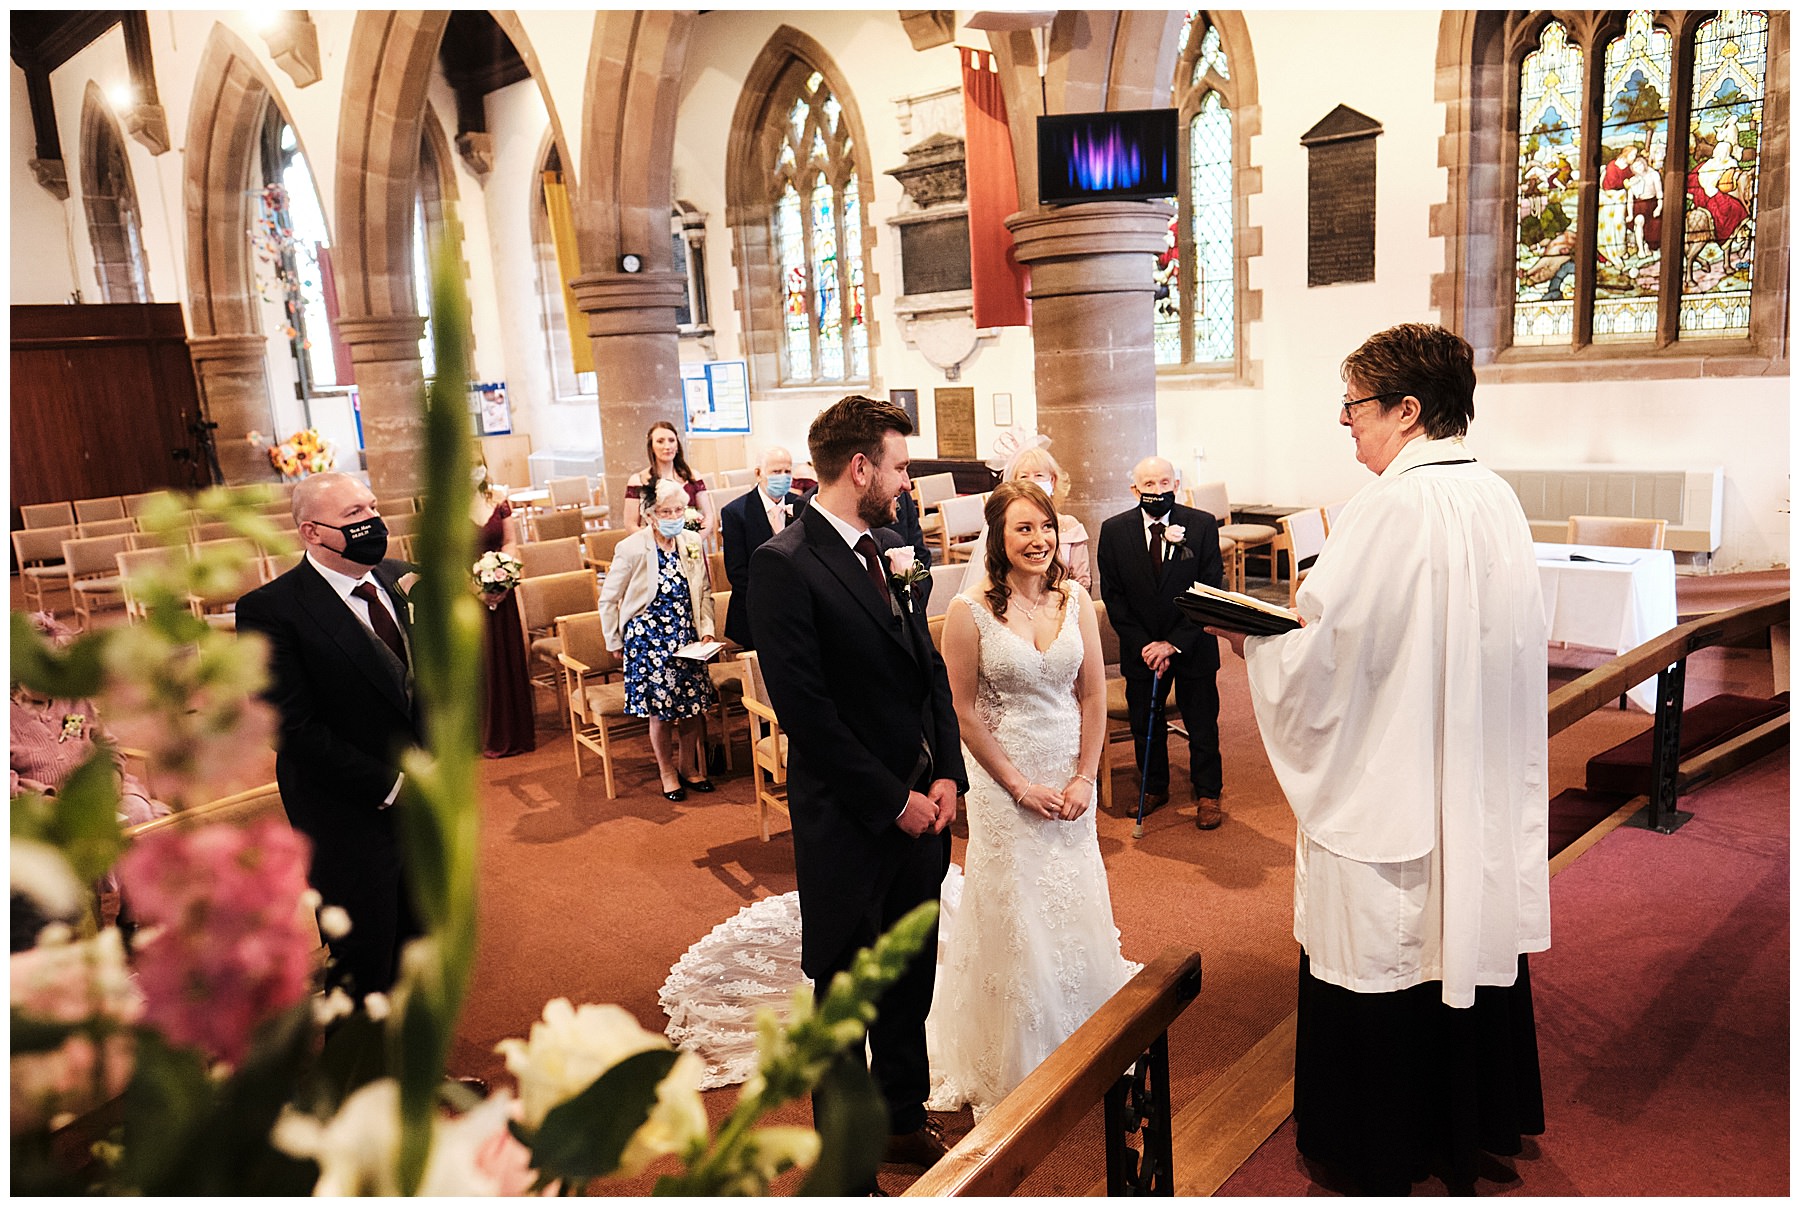 Creative documentary wedding photography at St John the Baptist Church, Shenstone & Moxhull Hall